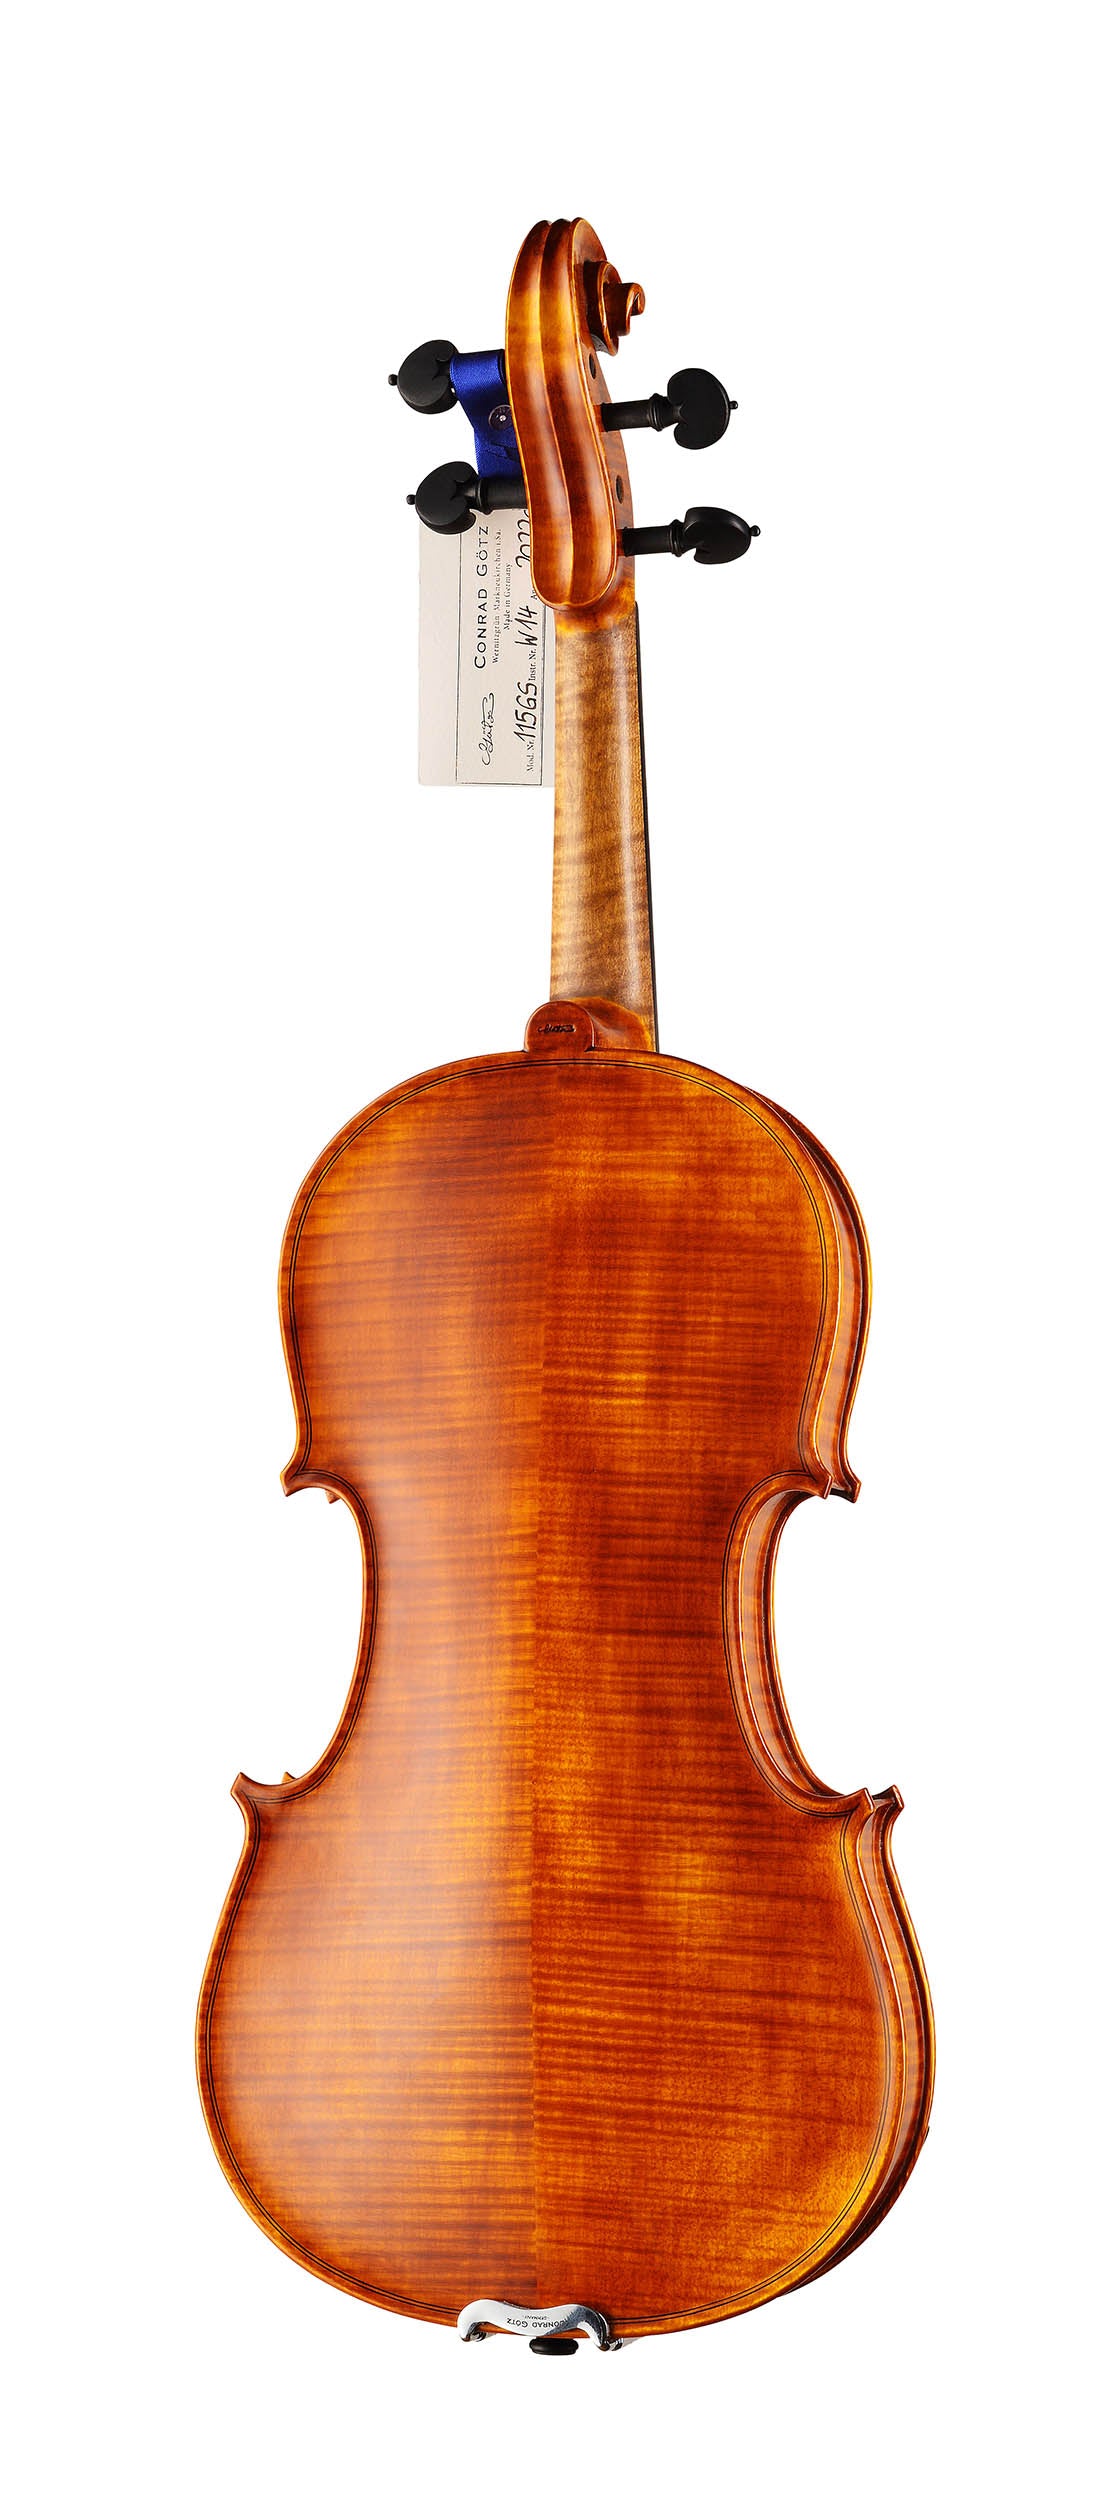 GOLDEN STATE Violin #115 GS 